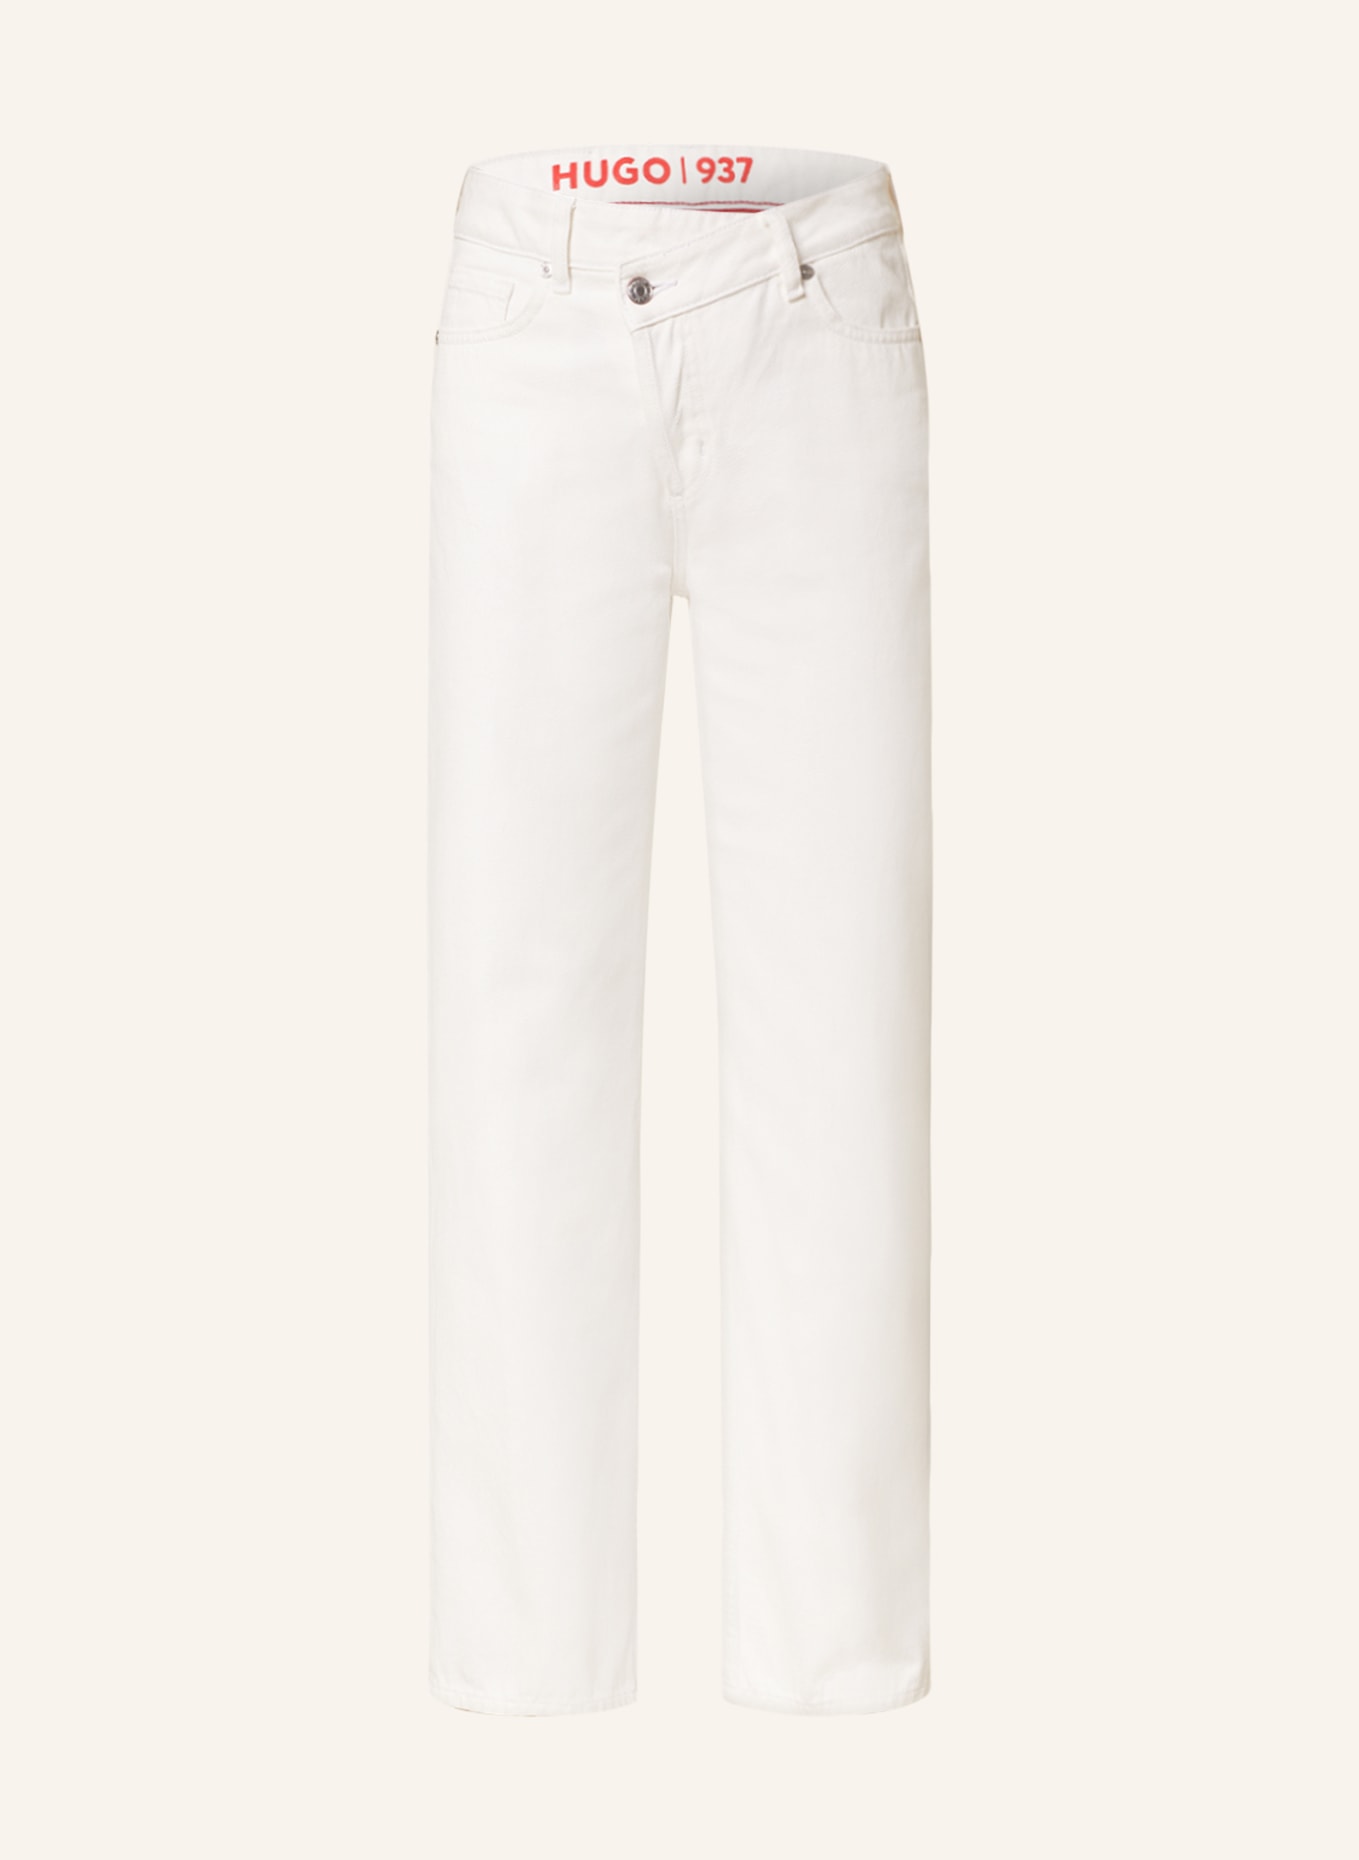 HUGO Straight jeans 937, Color: ECRU (Image 1)